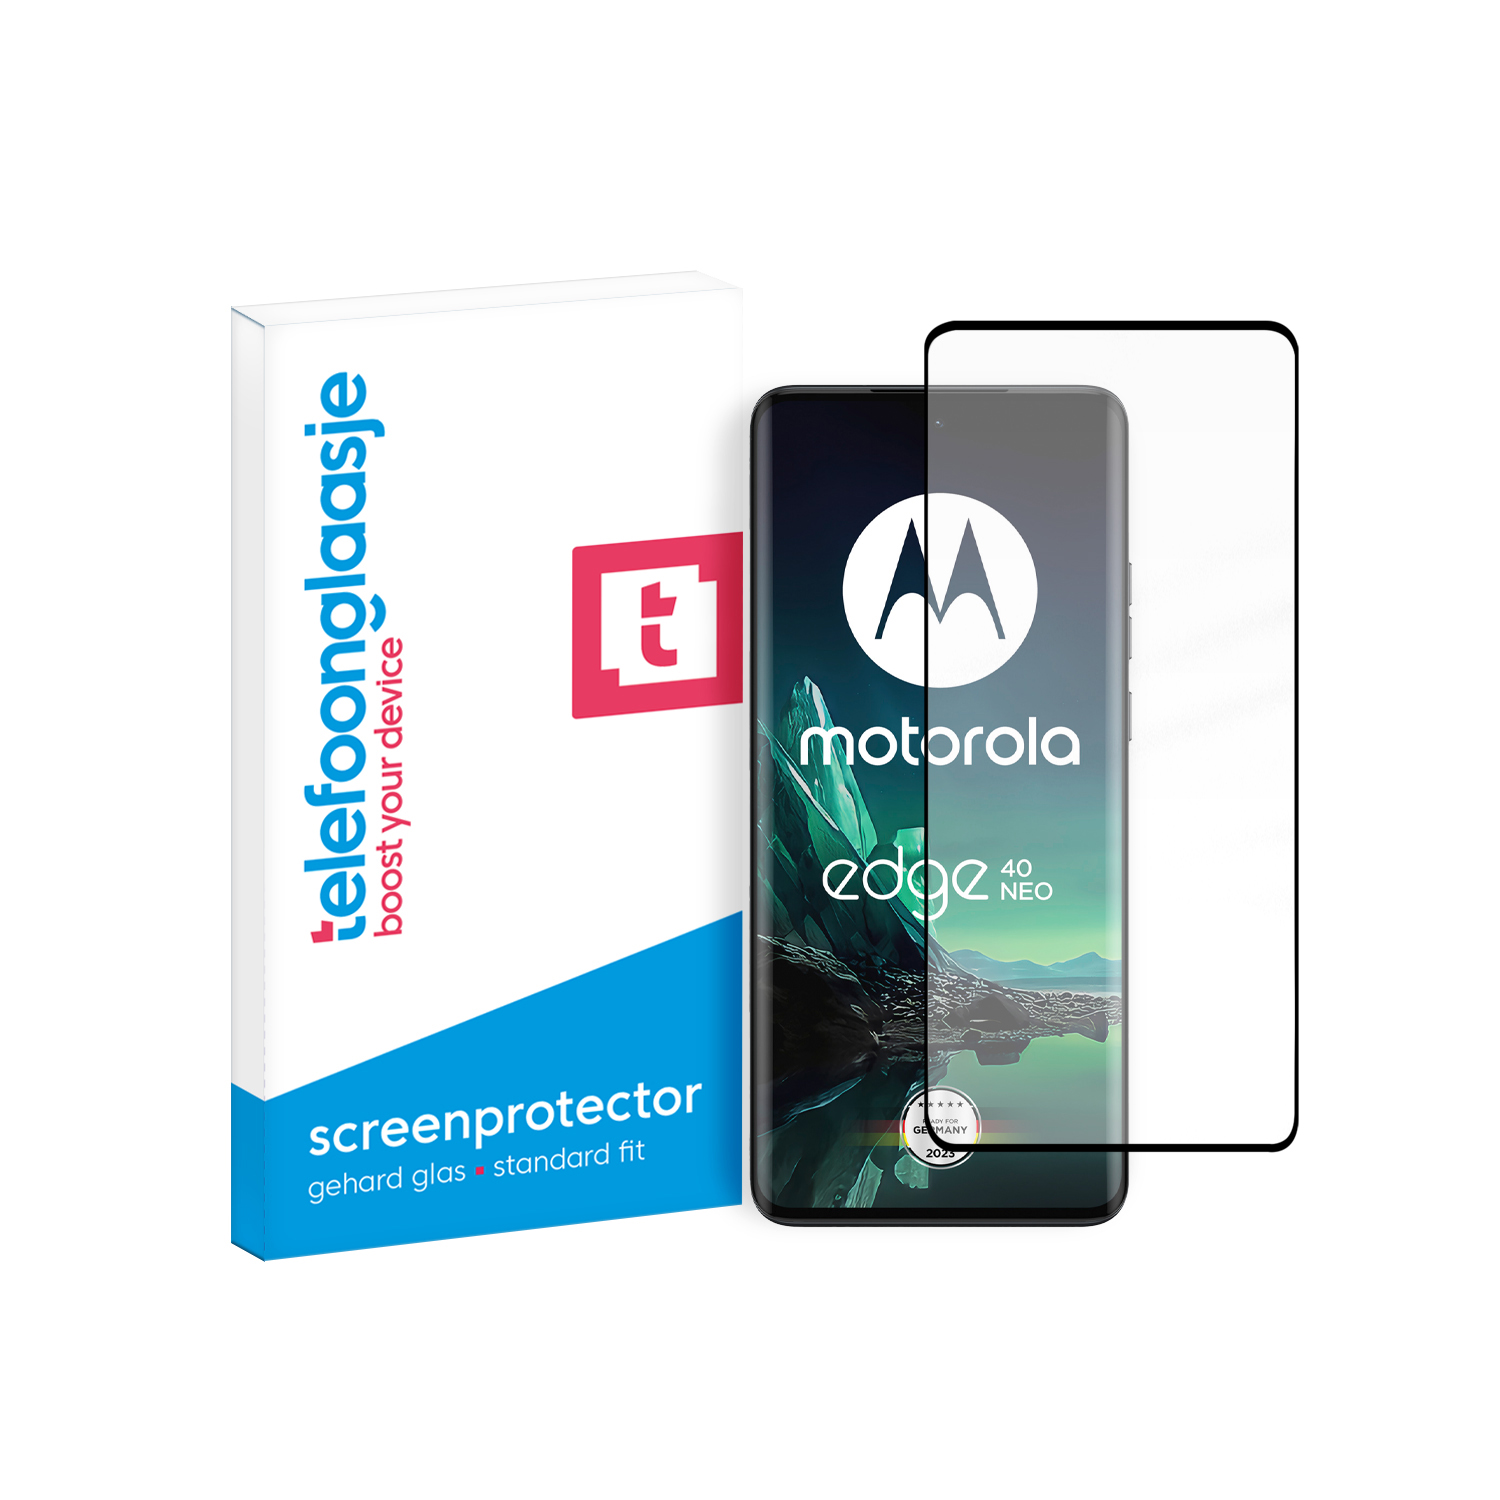 Motorola Edge 40 Neo screenprotector gehard glas Edge to Edge